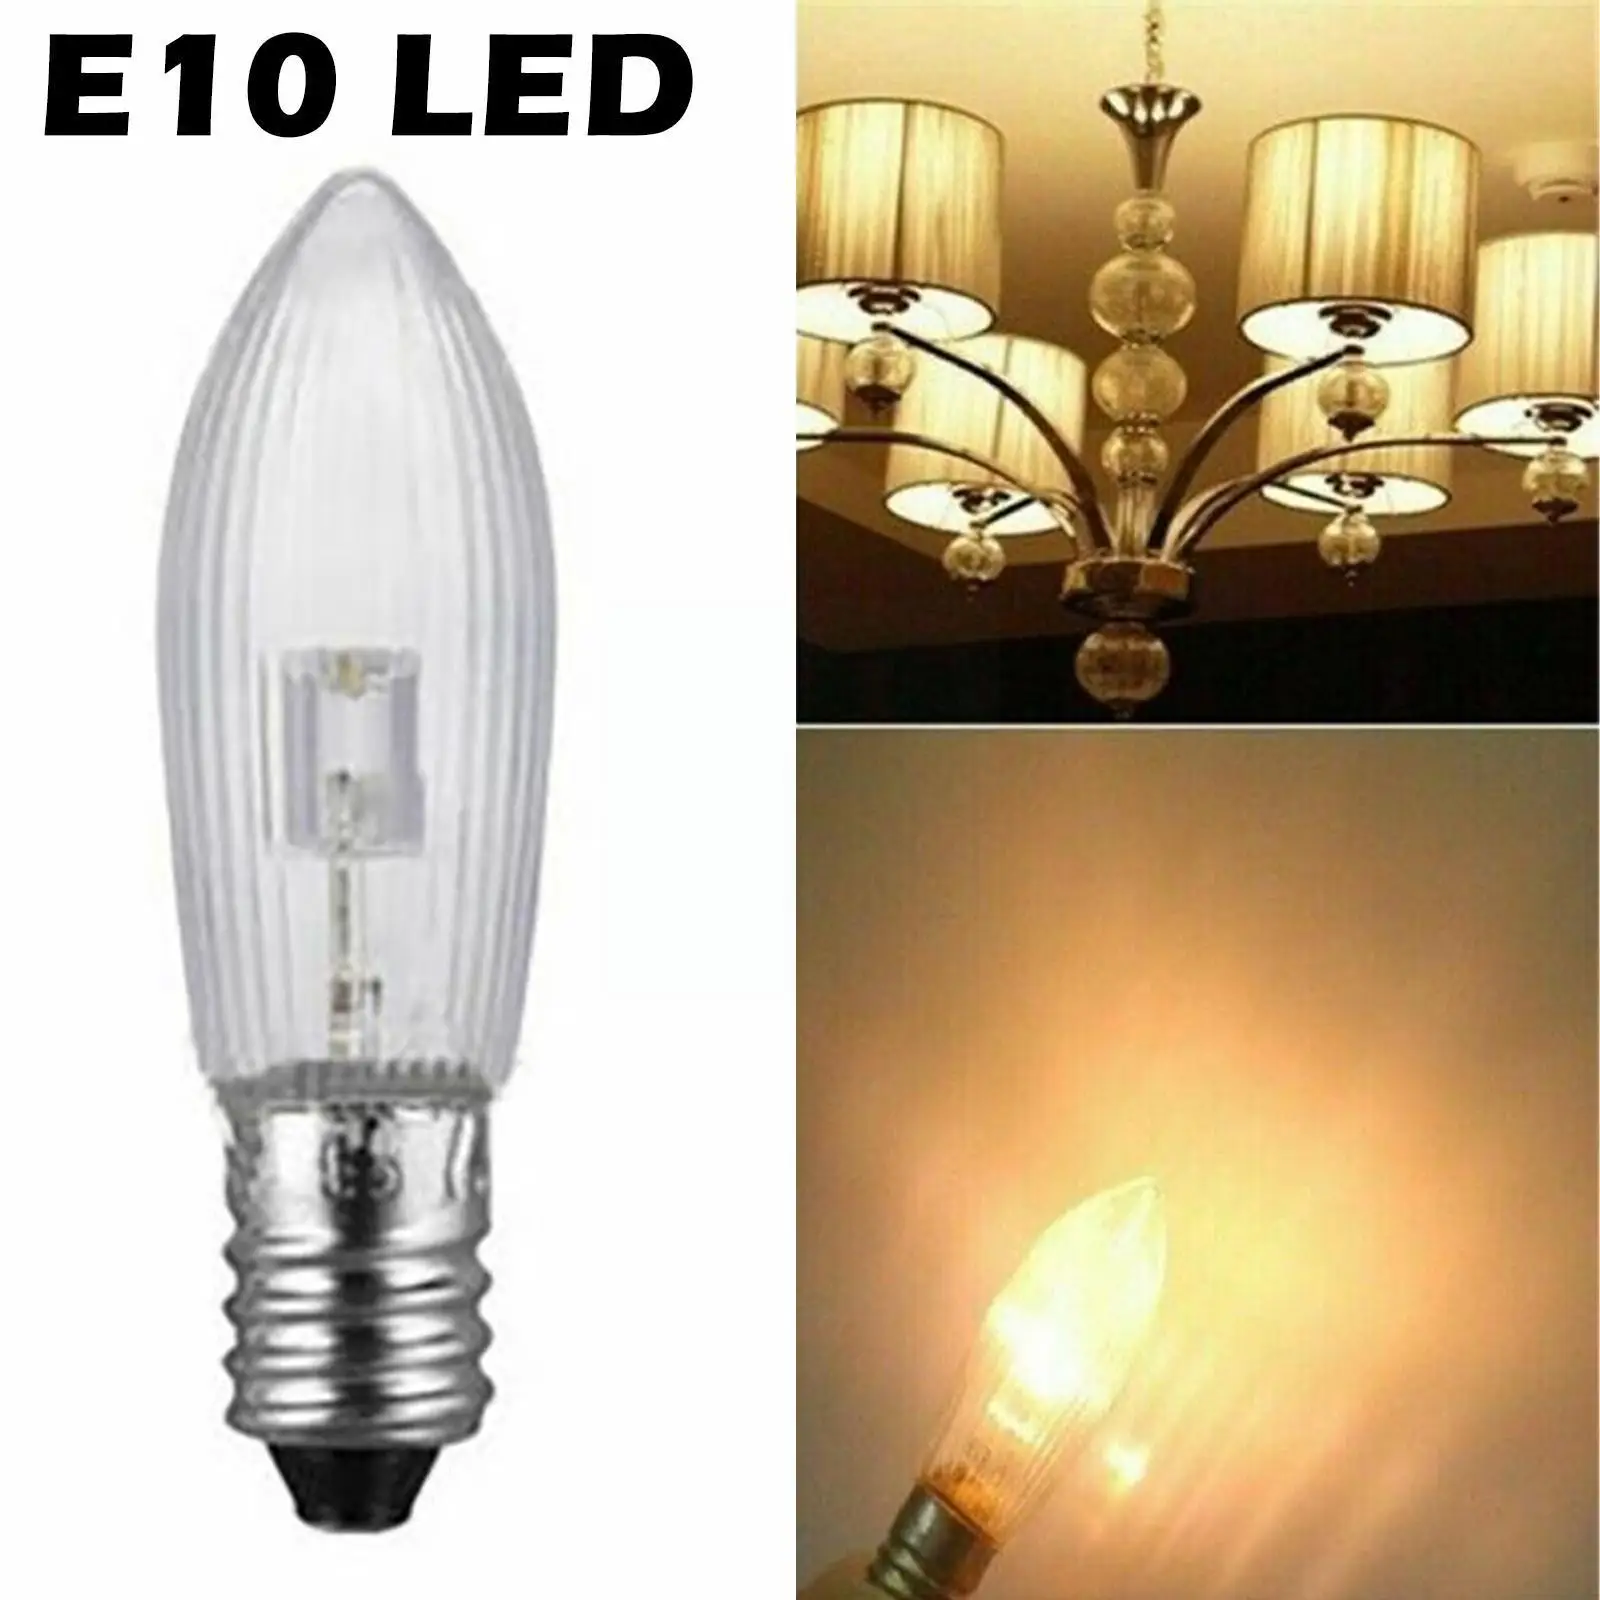 

E10 LED Bulbs Light Replacement Lamp Bulbs for Light Chains 10V-55V AC Bathroom Kitchen Home Lamps Bulb Decoration Lights G0Q0